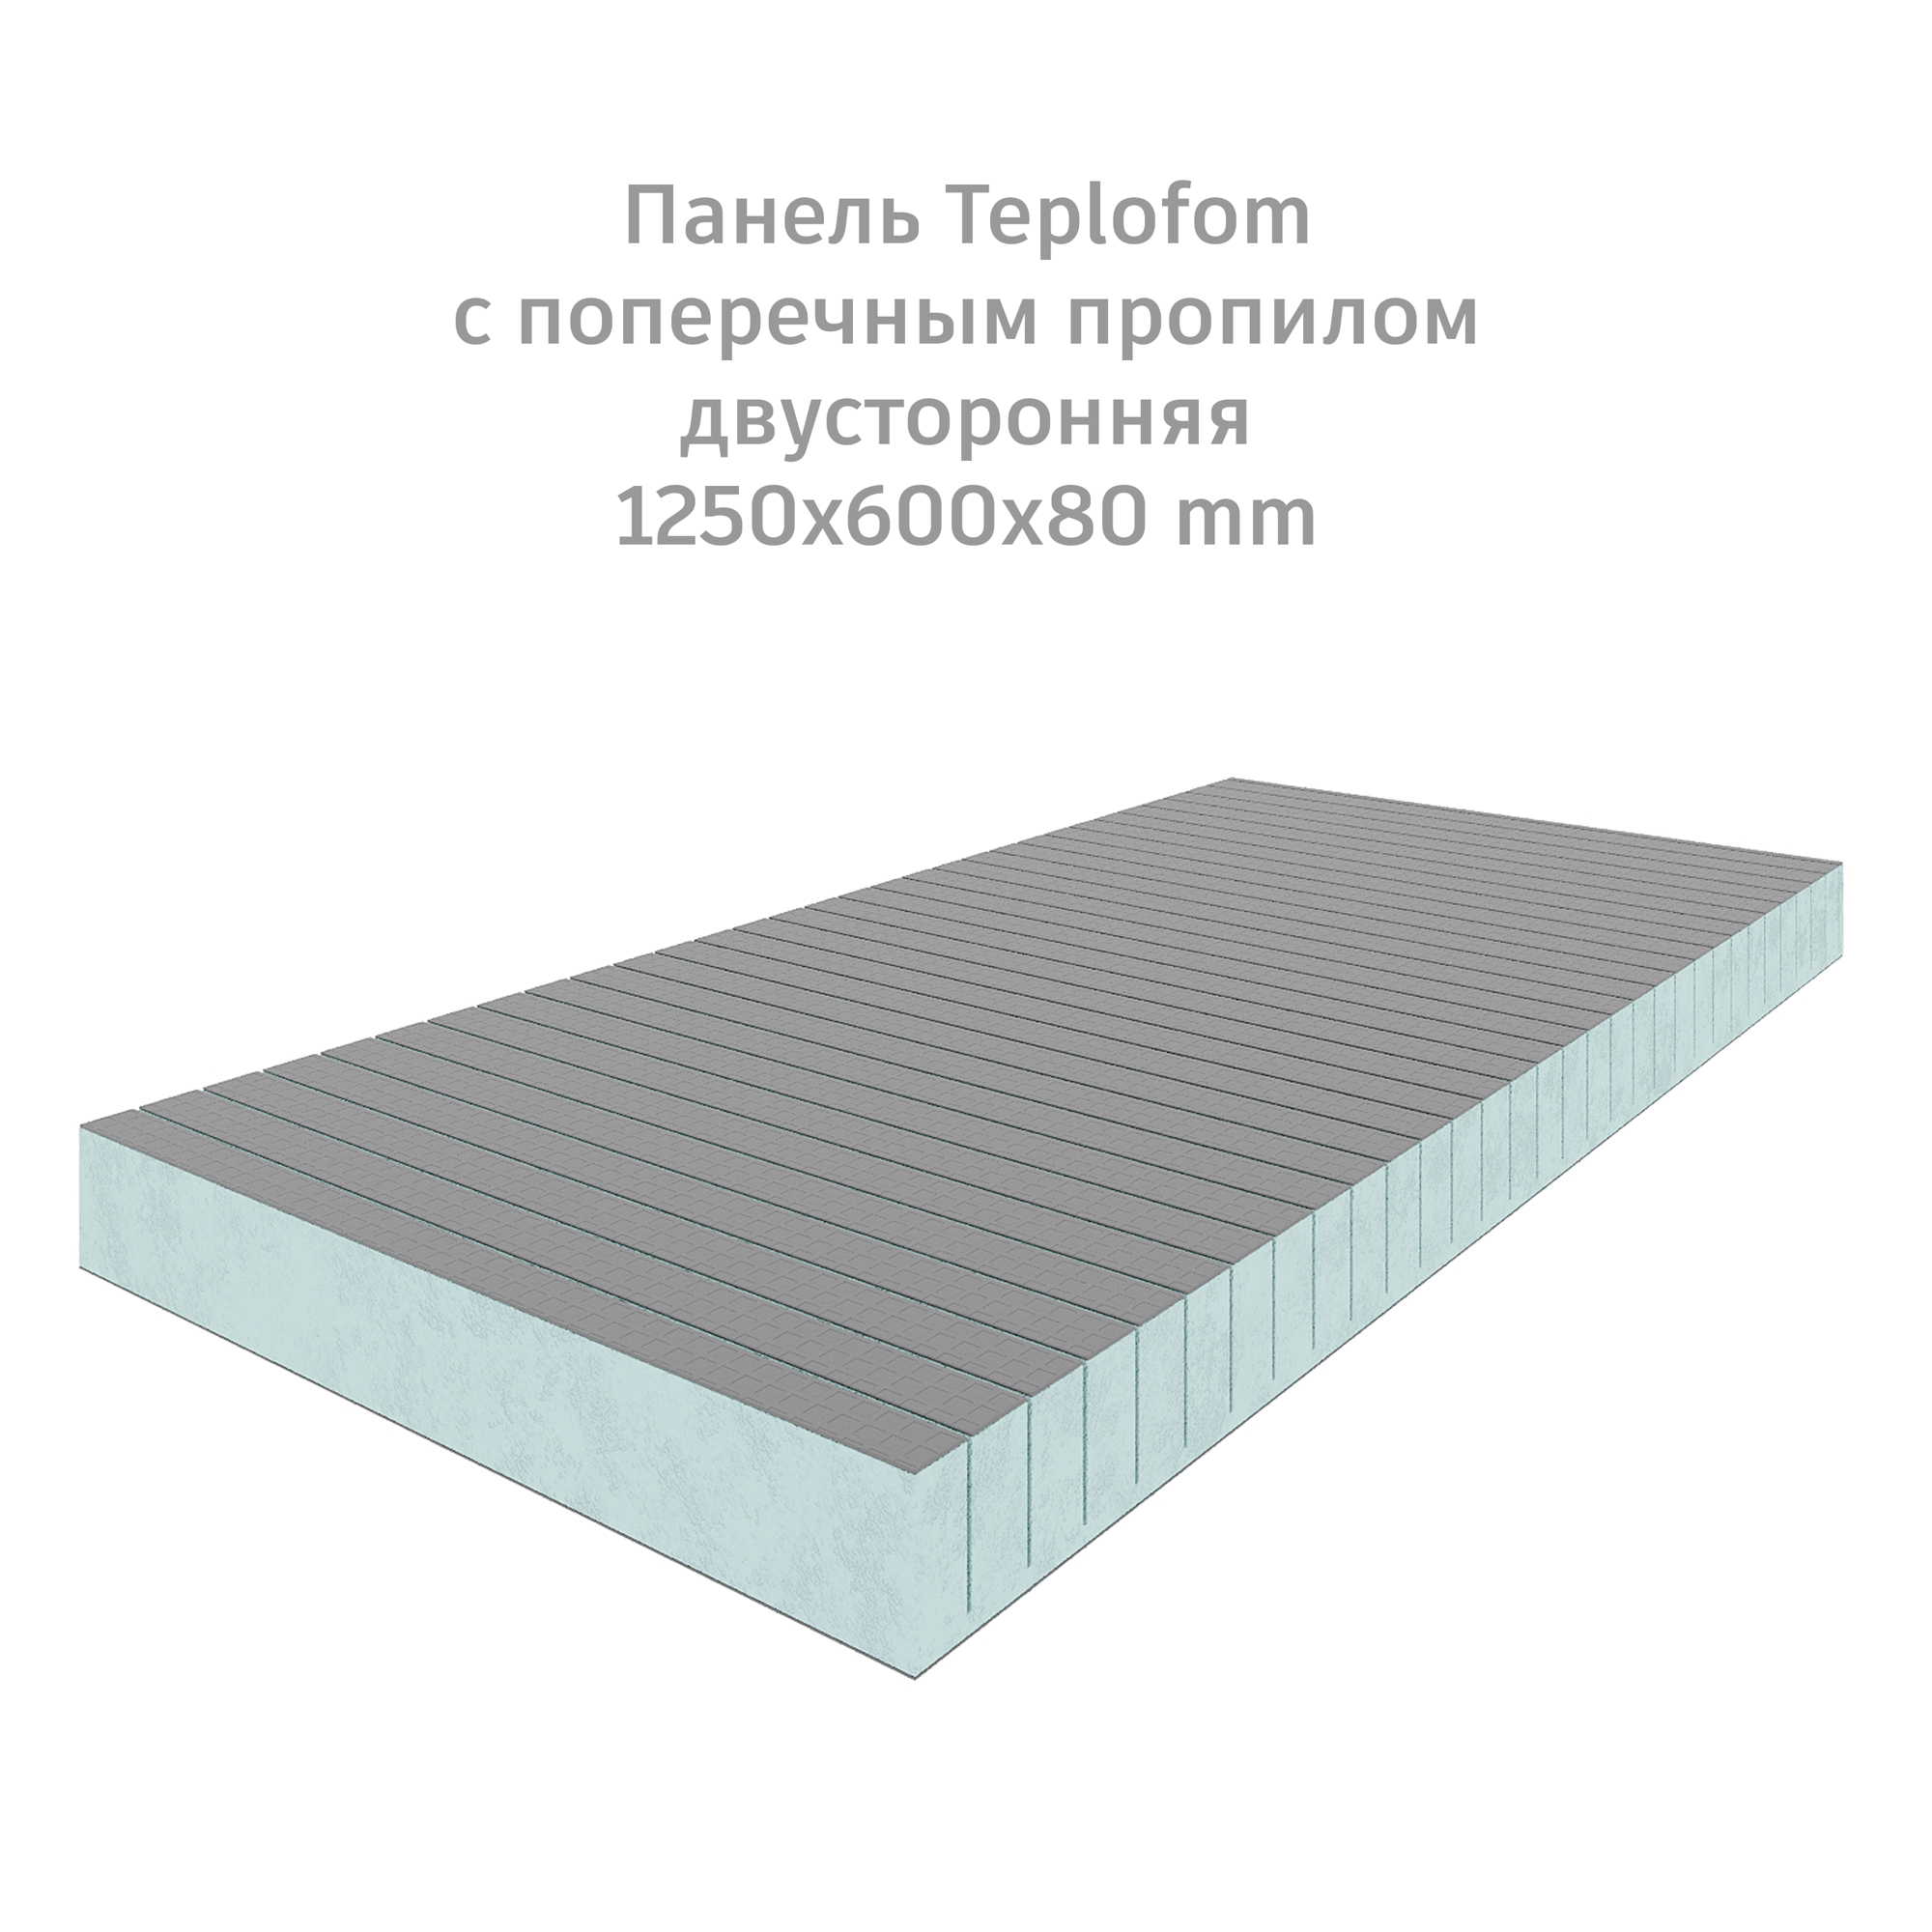 фото Теплоизоляционная панель teplofom+80 xps-02 (двухсторонний слой) 1250x600x80мм поперечный